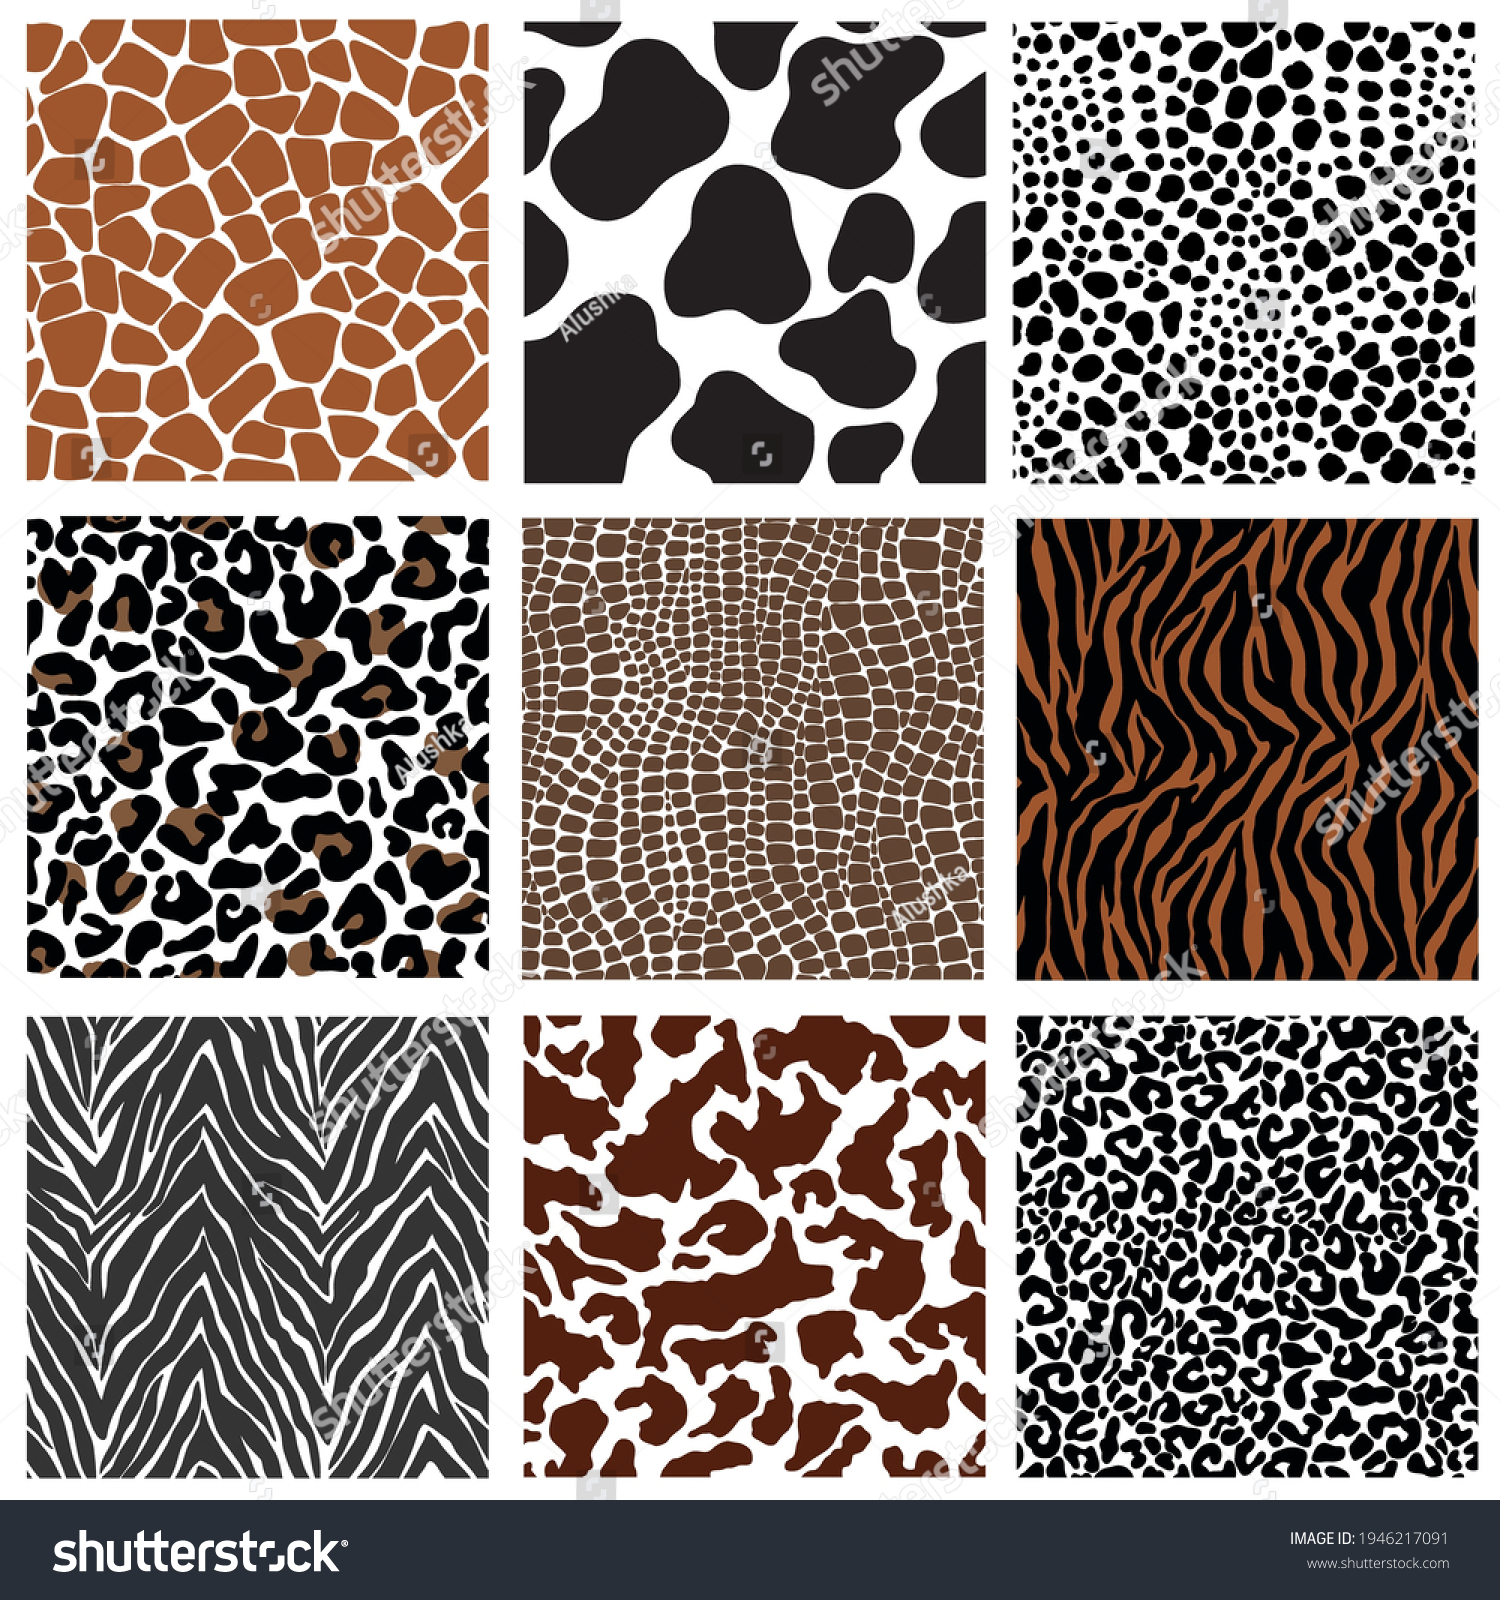 SVG of 9 Animal Skin Print Seamless Pattern, Cheetah Leopard Cow Snake Tiger Zebra Alligator  Giraffe Seamless Pattern Textures Background svg